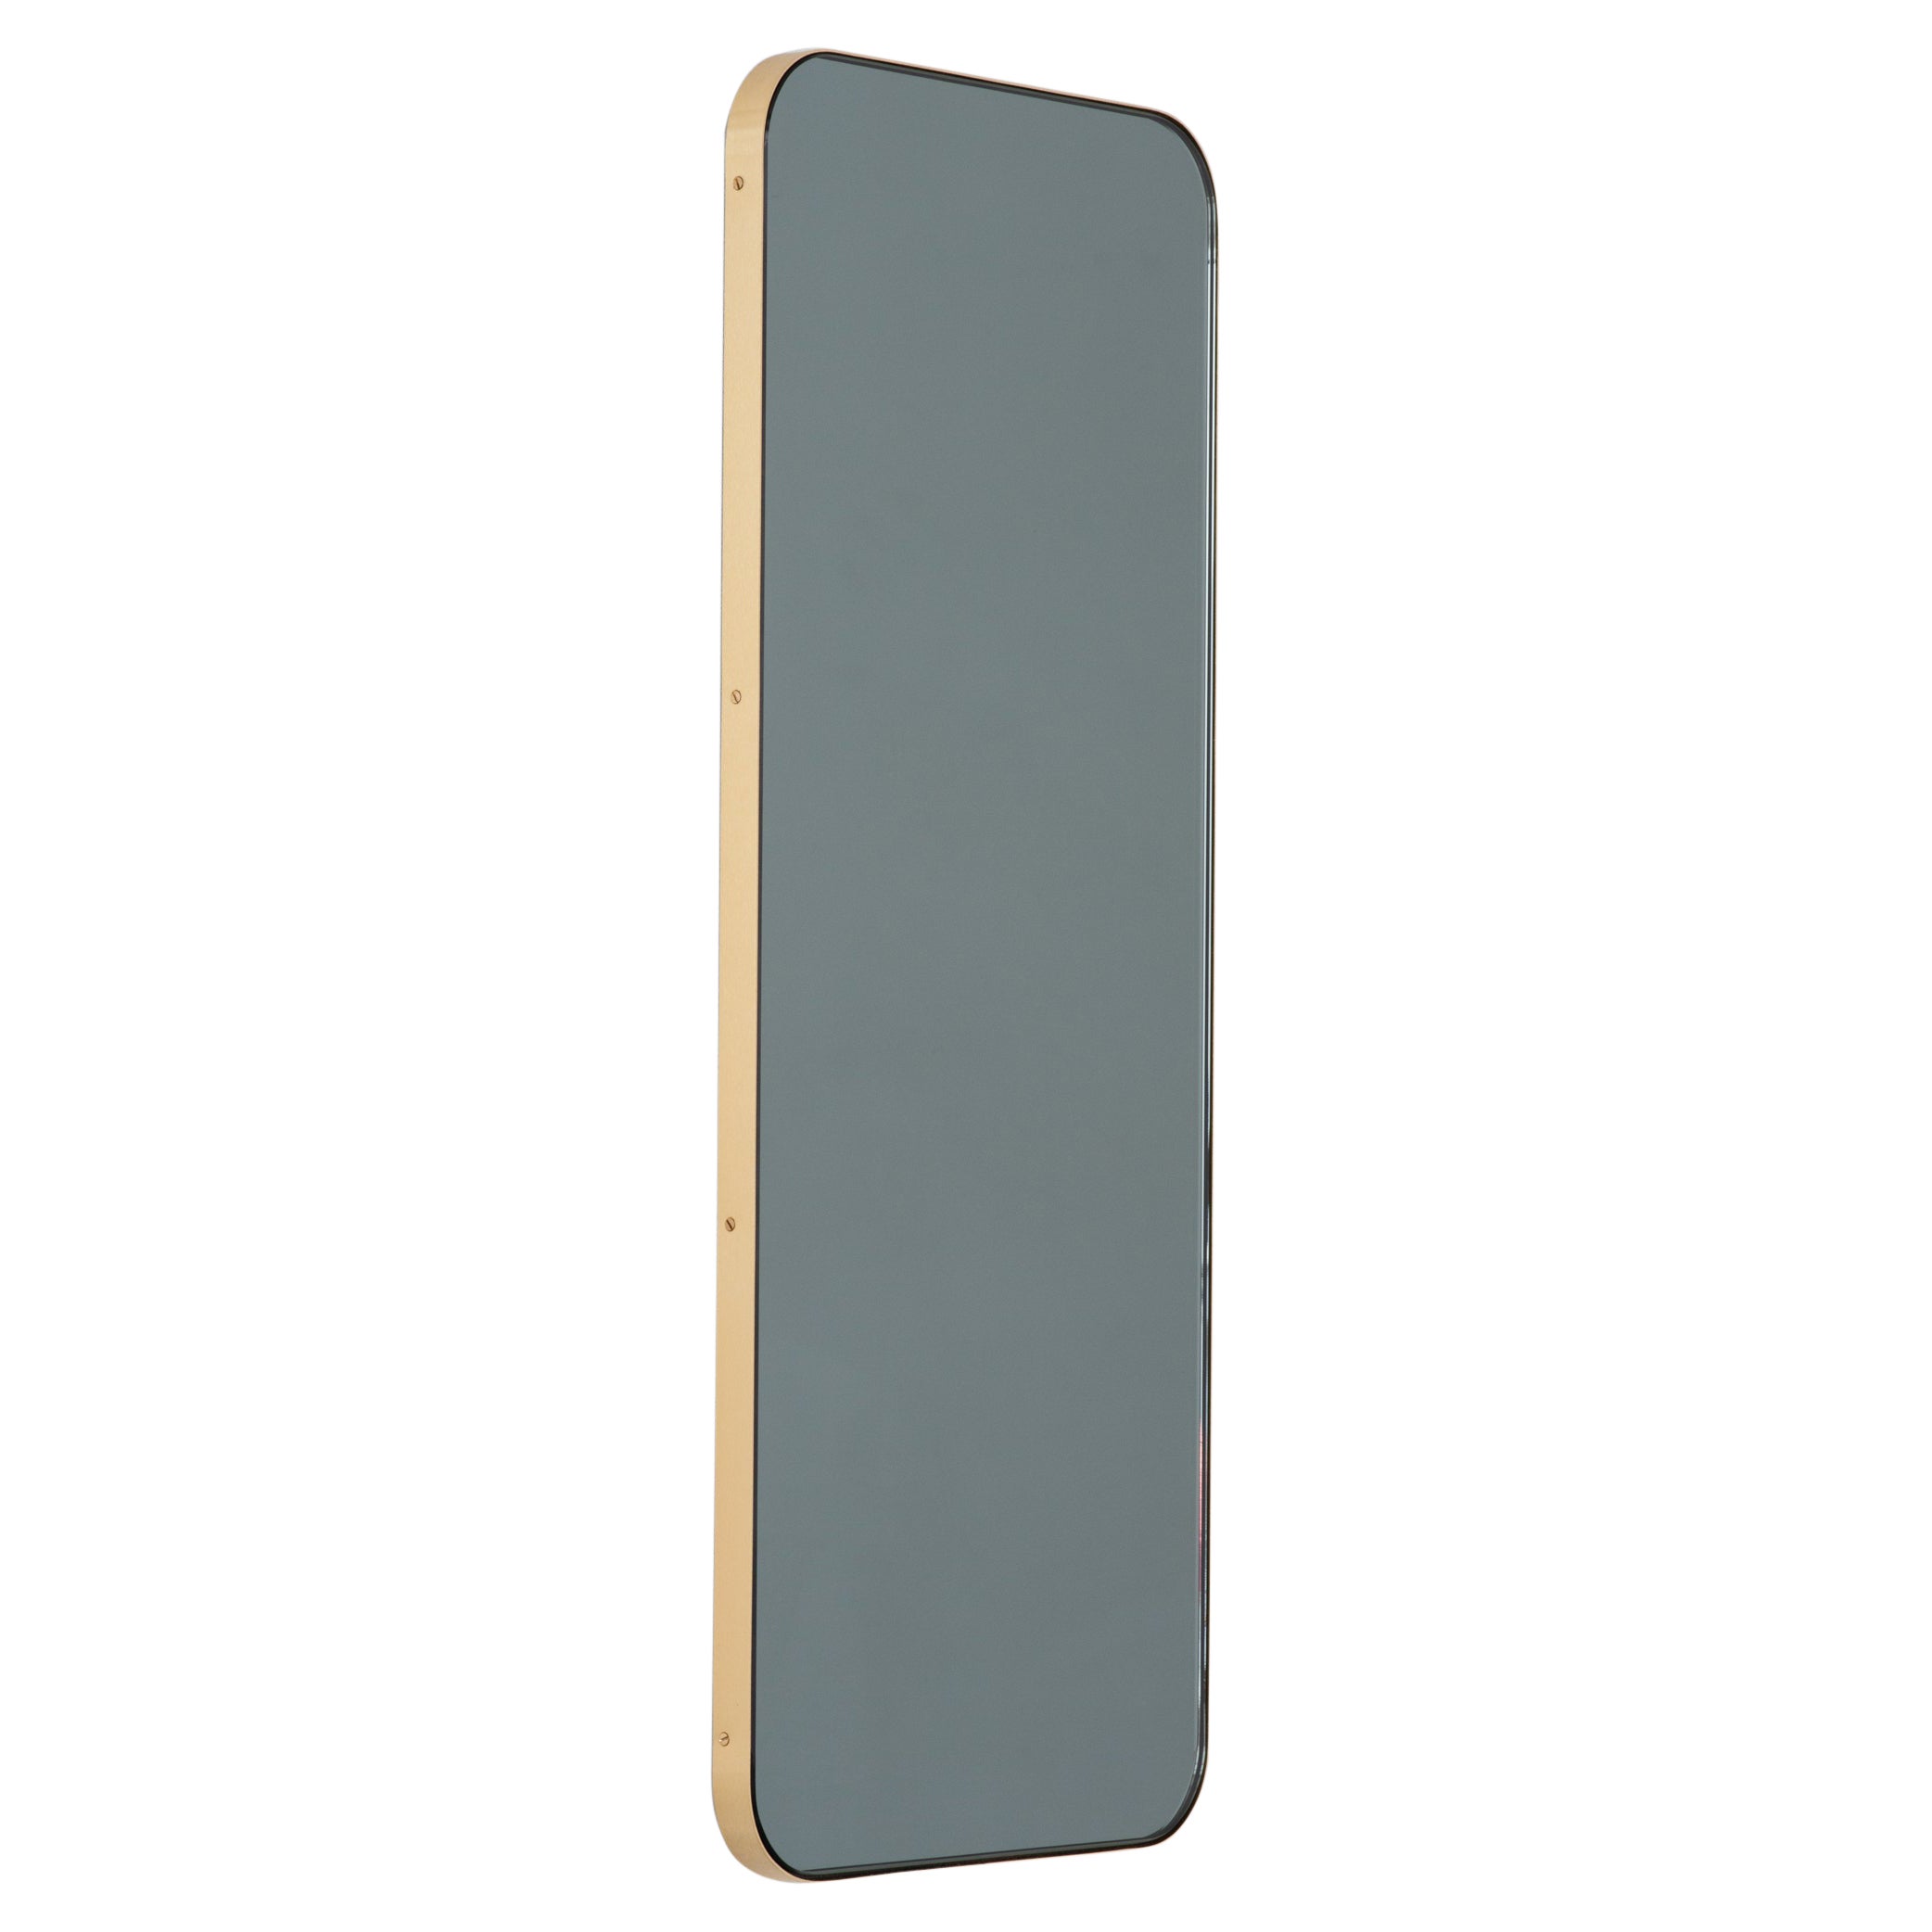 Quadris Black Tinted Rectangular Contemporary Mirror with a Brass Frame, Small